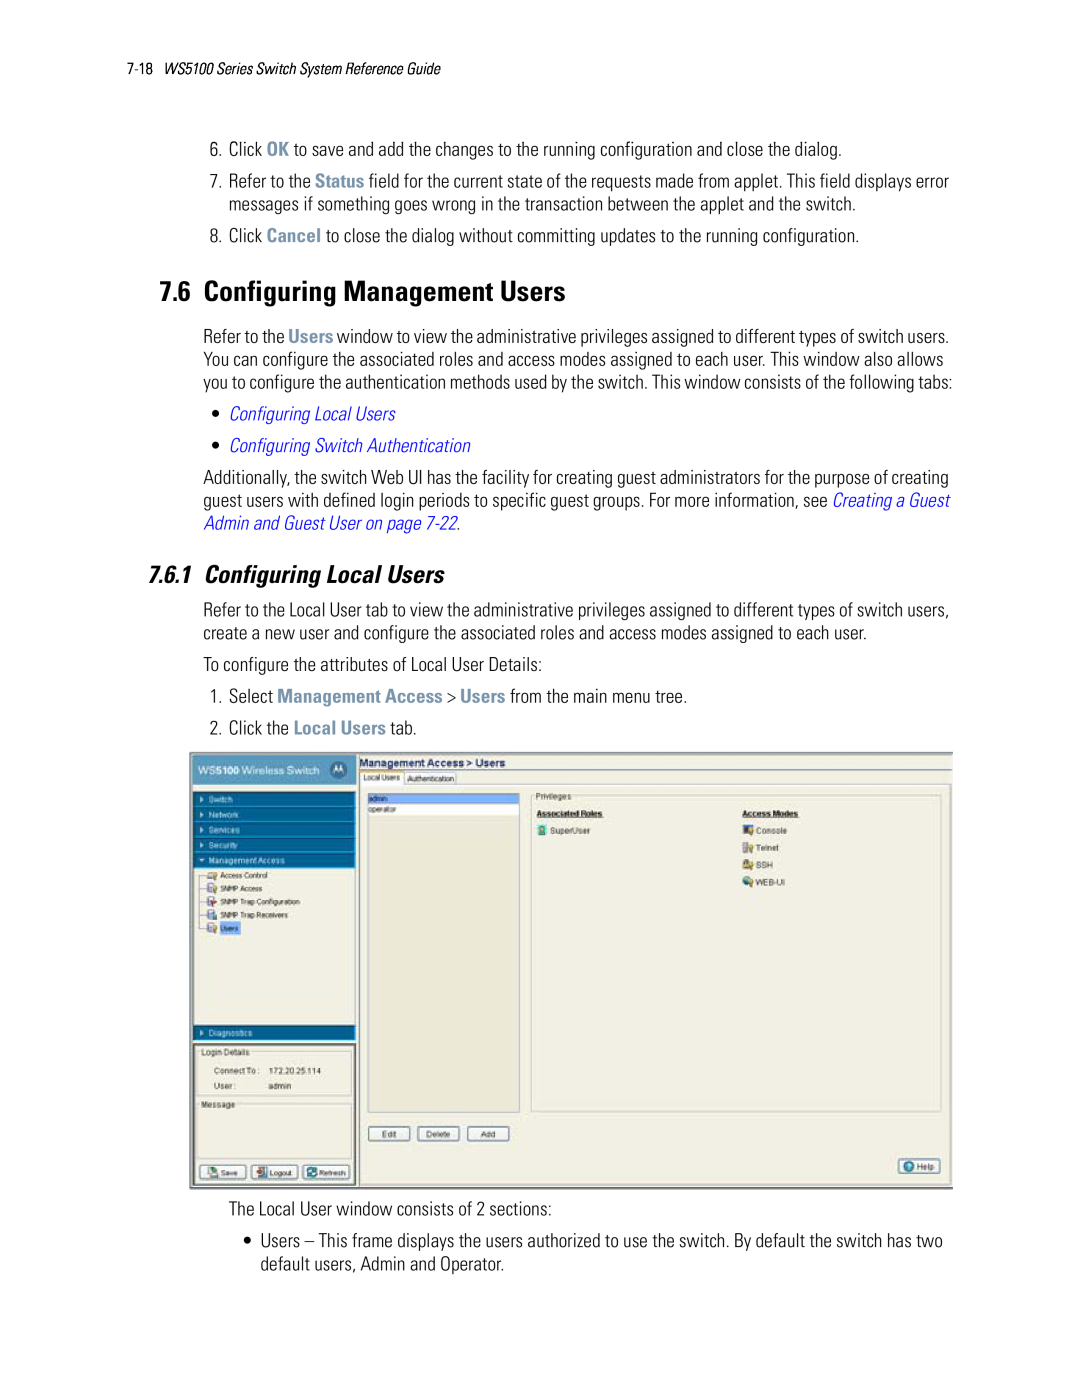 Motorola WS5100 manual 7.6Configuring Management Users, •Configuring Local Users, •Configuring Switch Authentication 